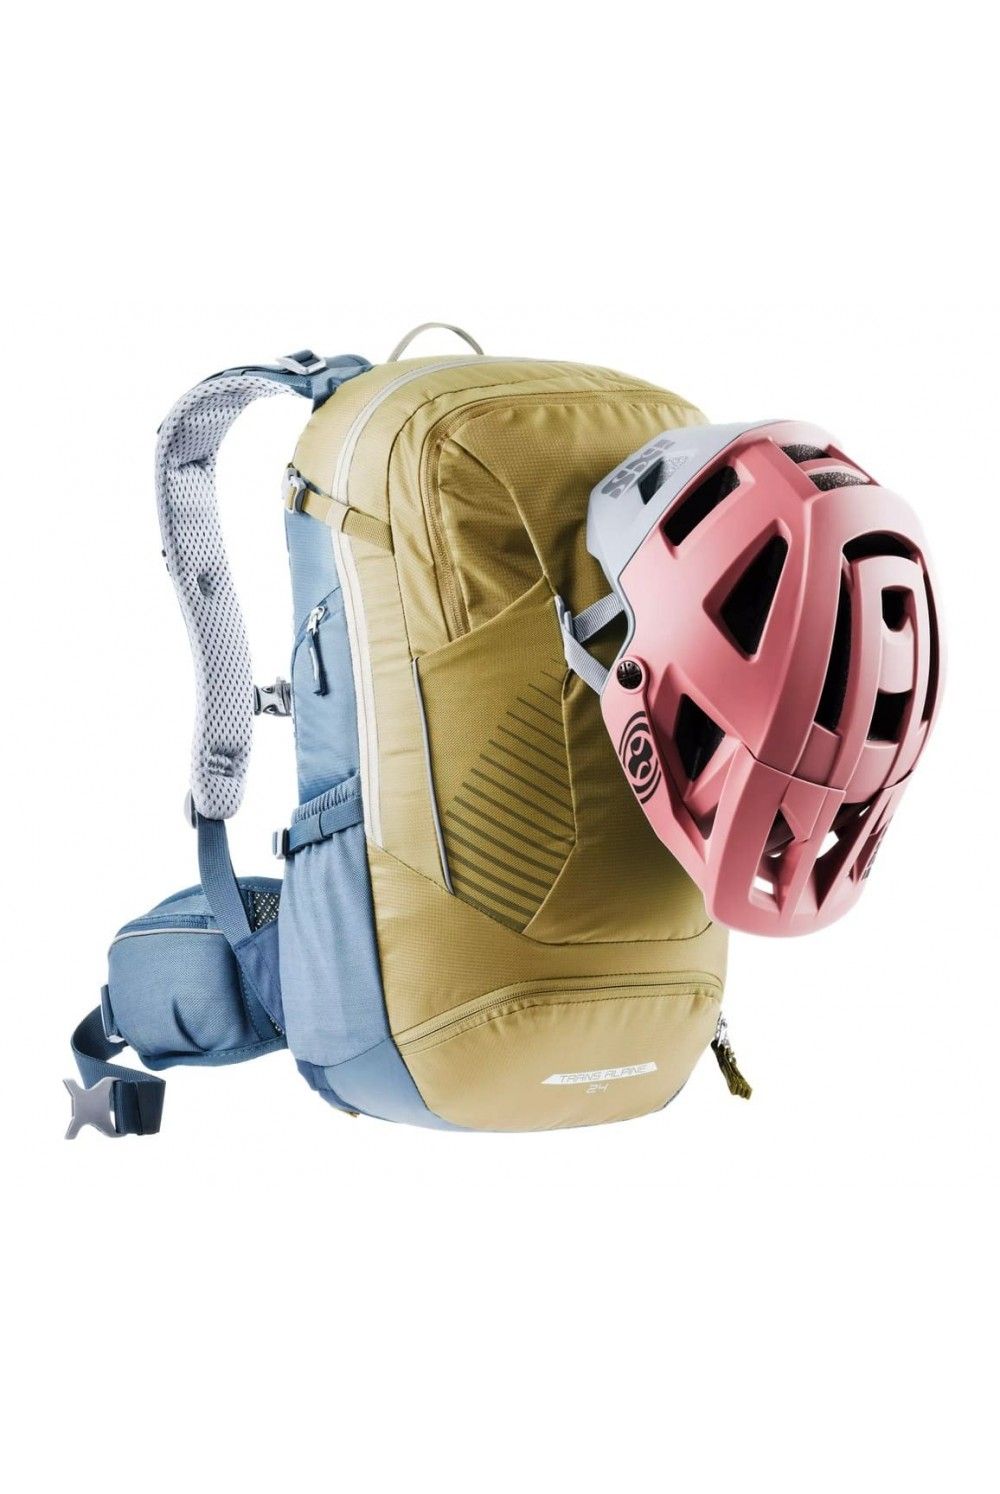 Deuter Trans Alpine 24 bike backpack